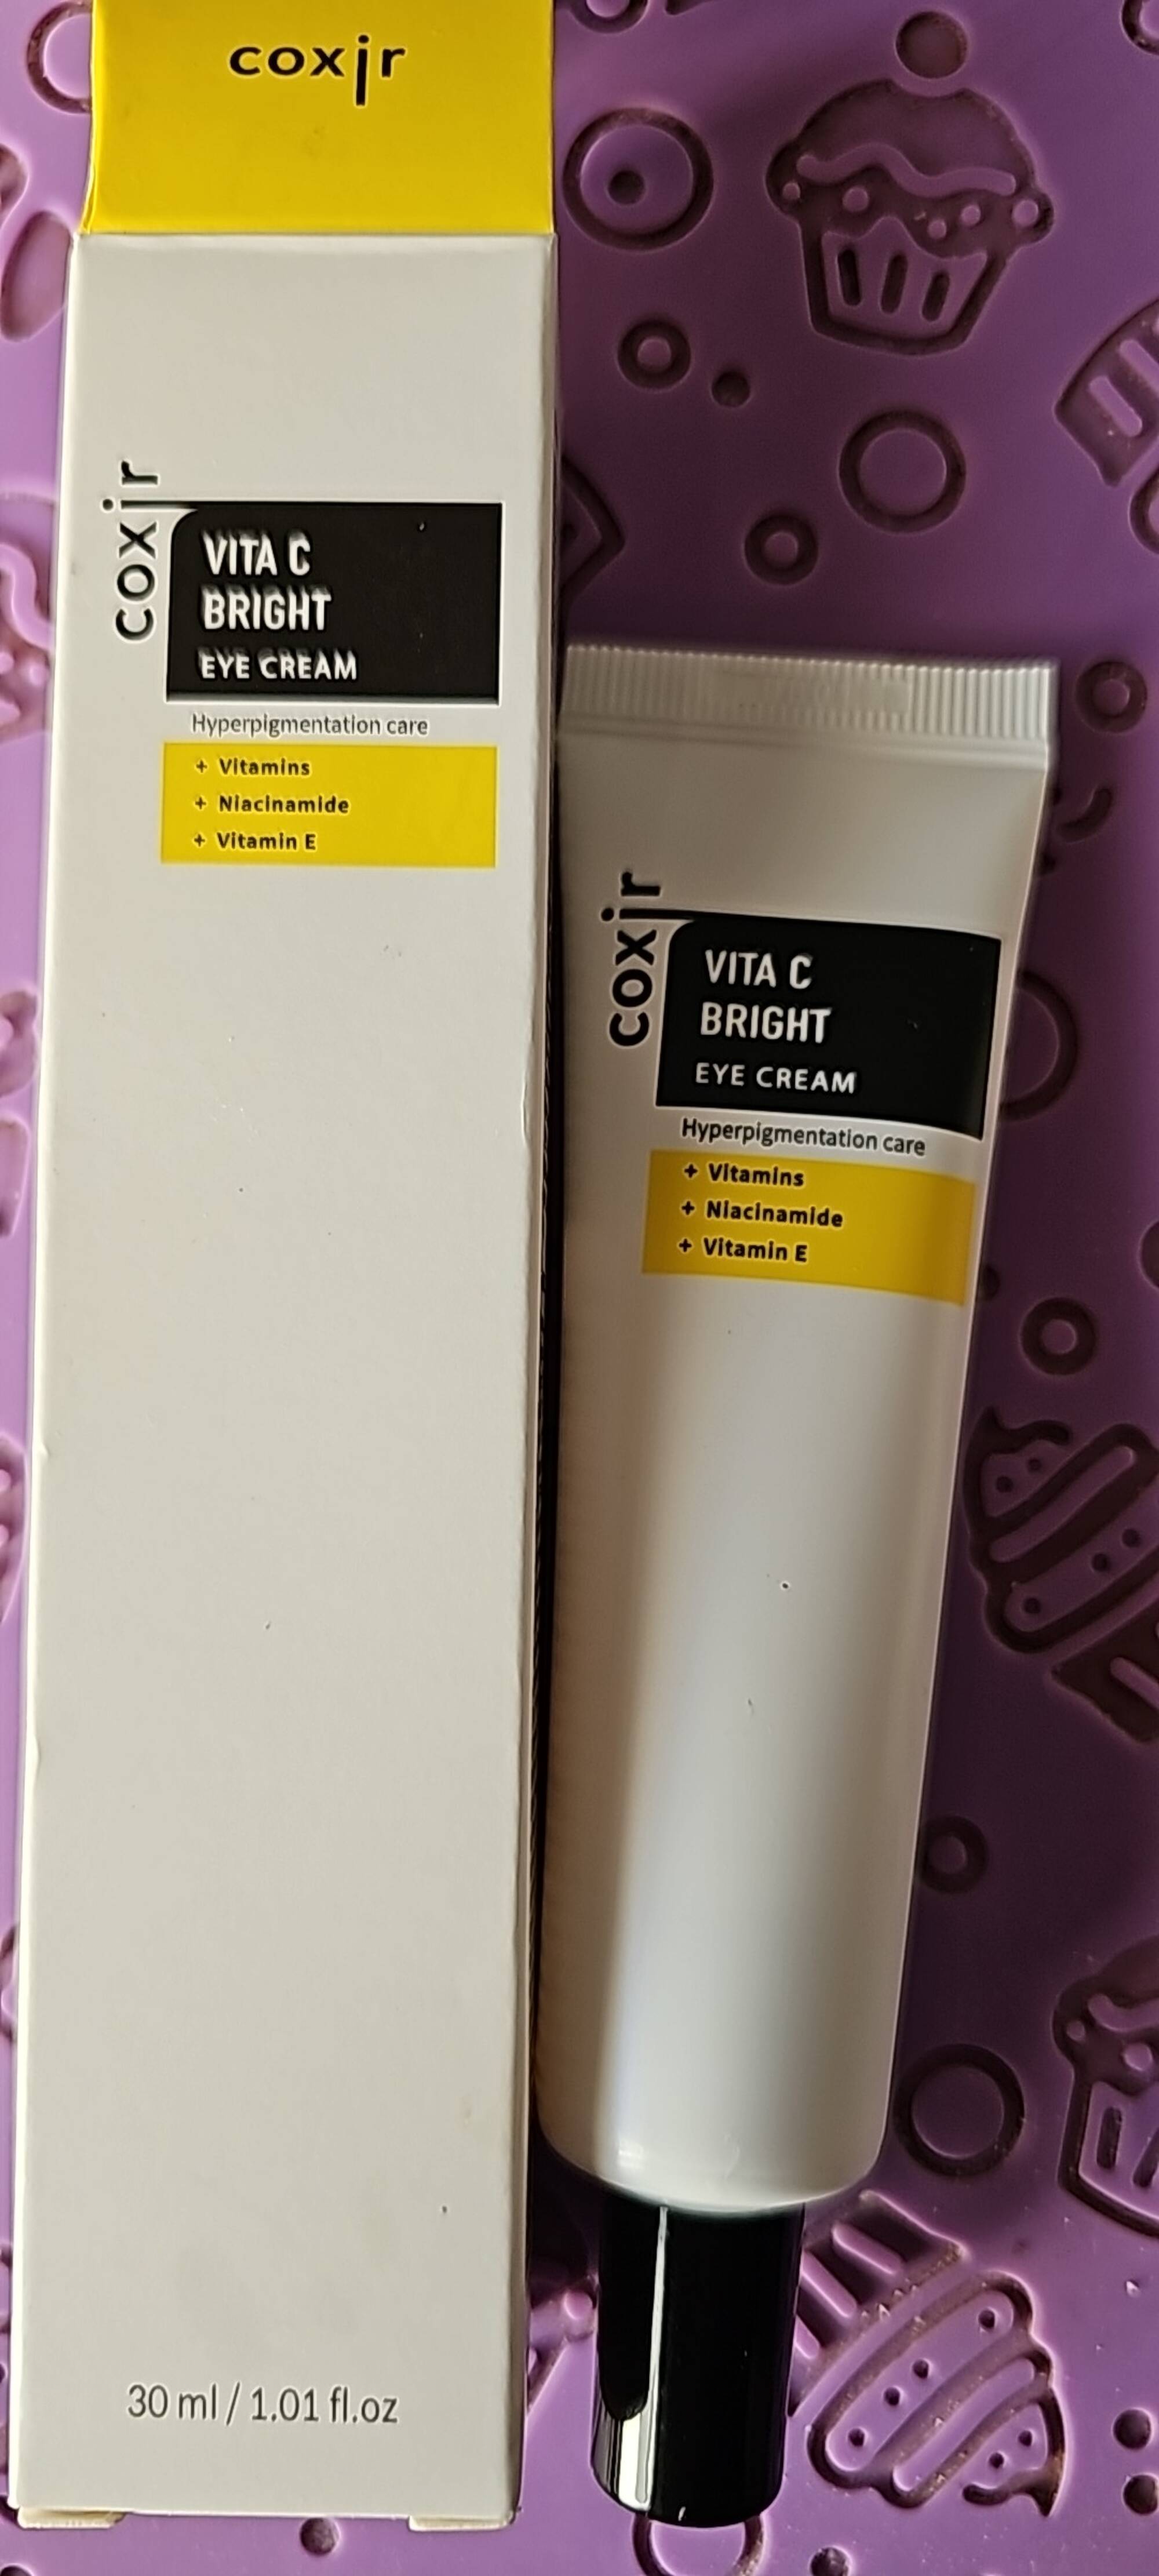 COXIR - Vita c bright - Eye cream